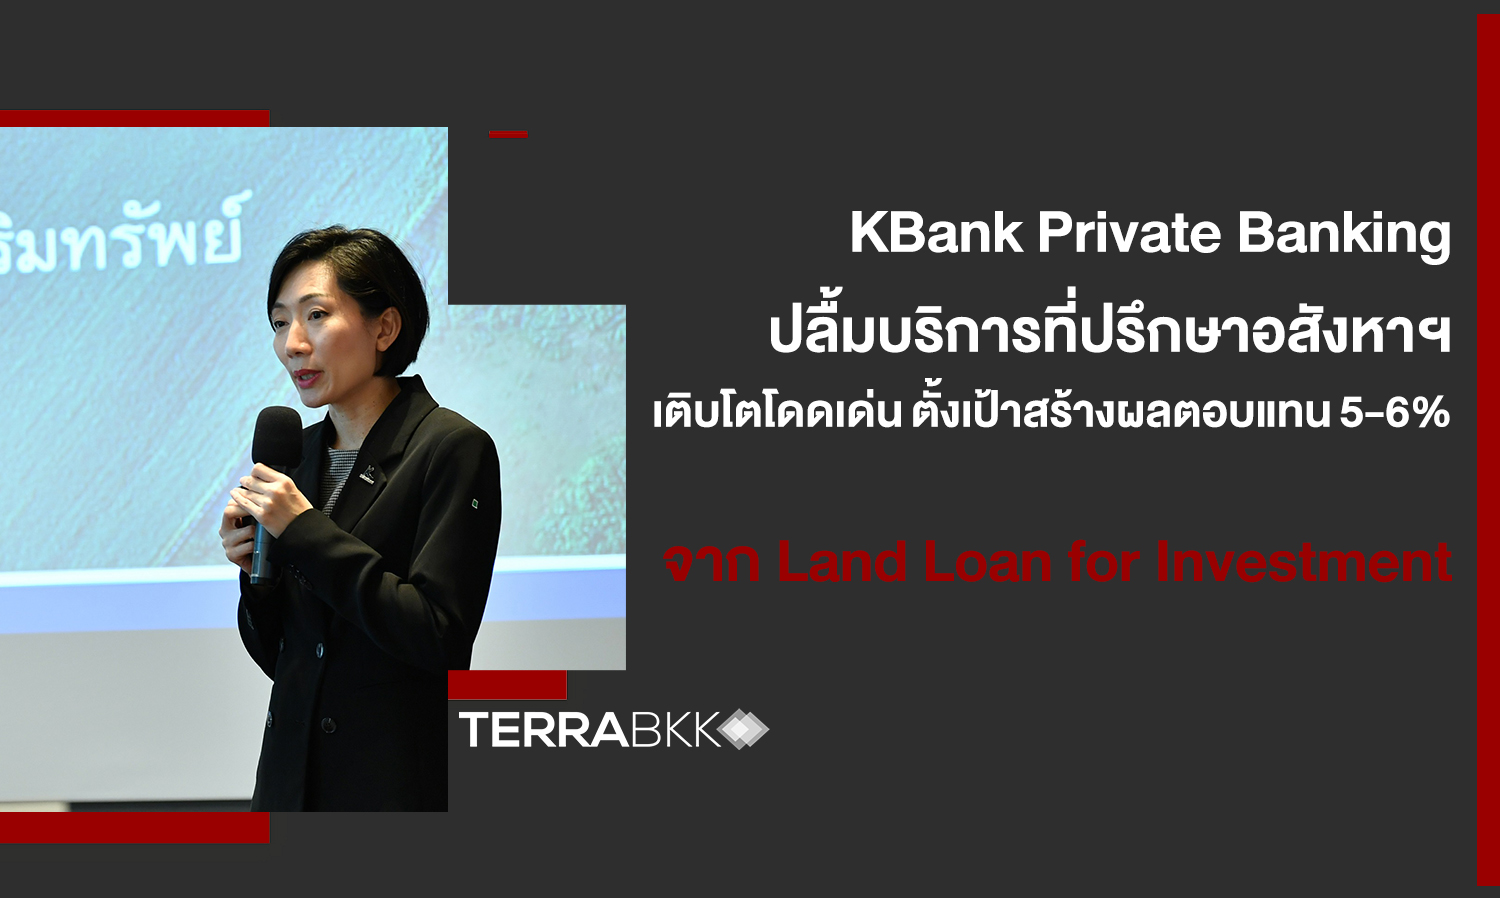 KBank Private Banking ปลื้มบริการที่ปรึกษาอสังหาฯ เติบโตโดดเด่น  ตั้งเป้าสร้างผลตอบแทน 5-6% จากการลงทุนผ่าน Land Loan for Investment 